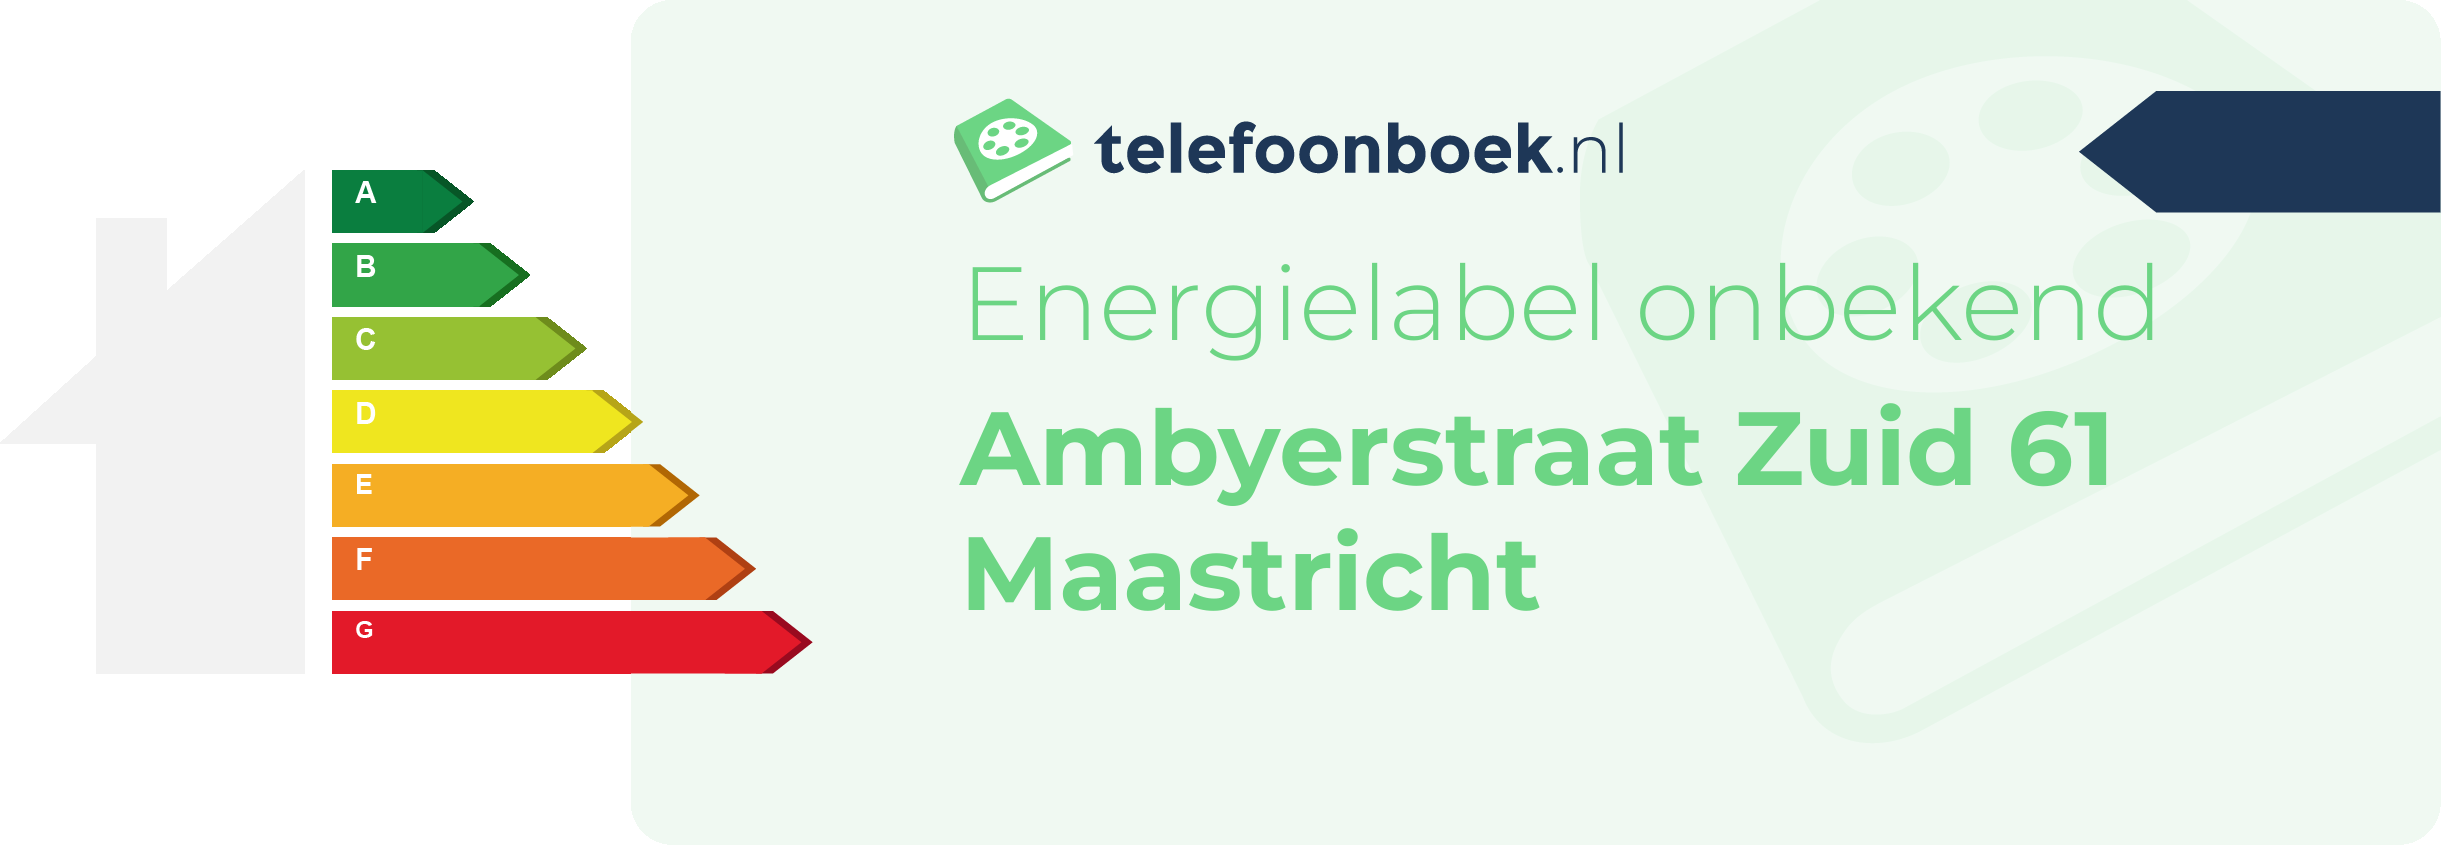 Energielabel Ambyerstraat Zuid 61 Maastricht